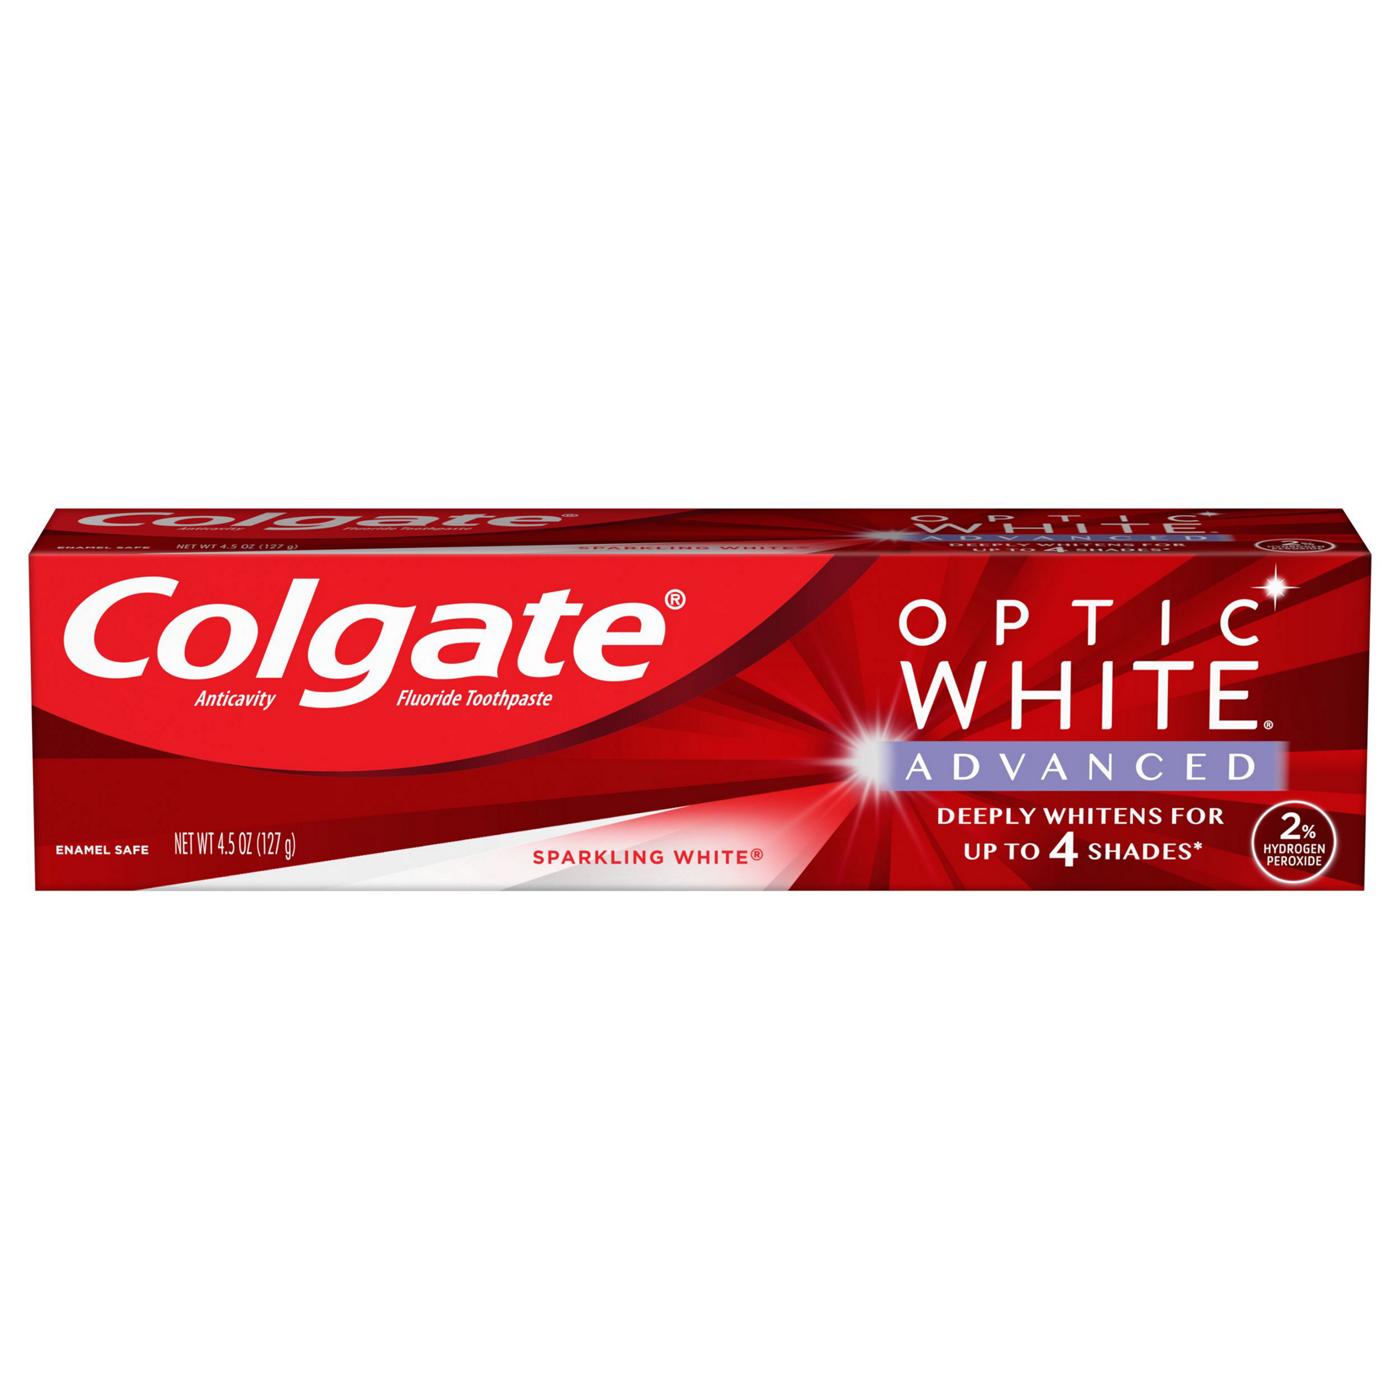 Colgate Optic White Advanced Anticavity Toothpaste - Sparkling White; image 1 of 11